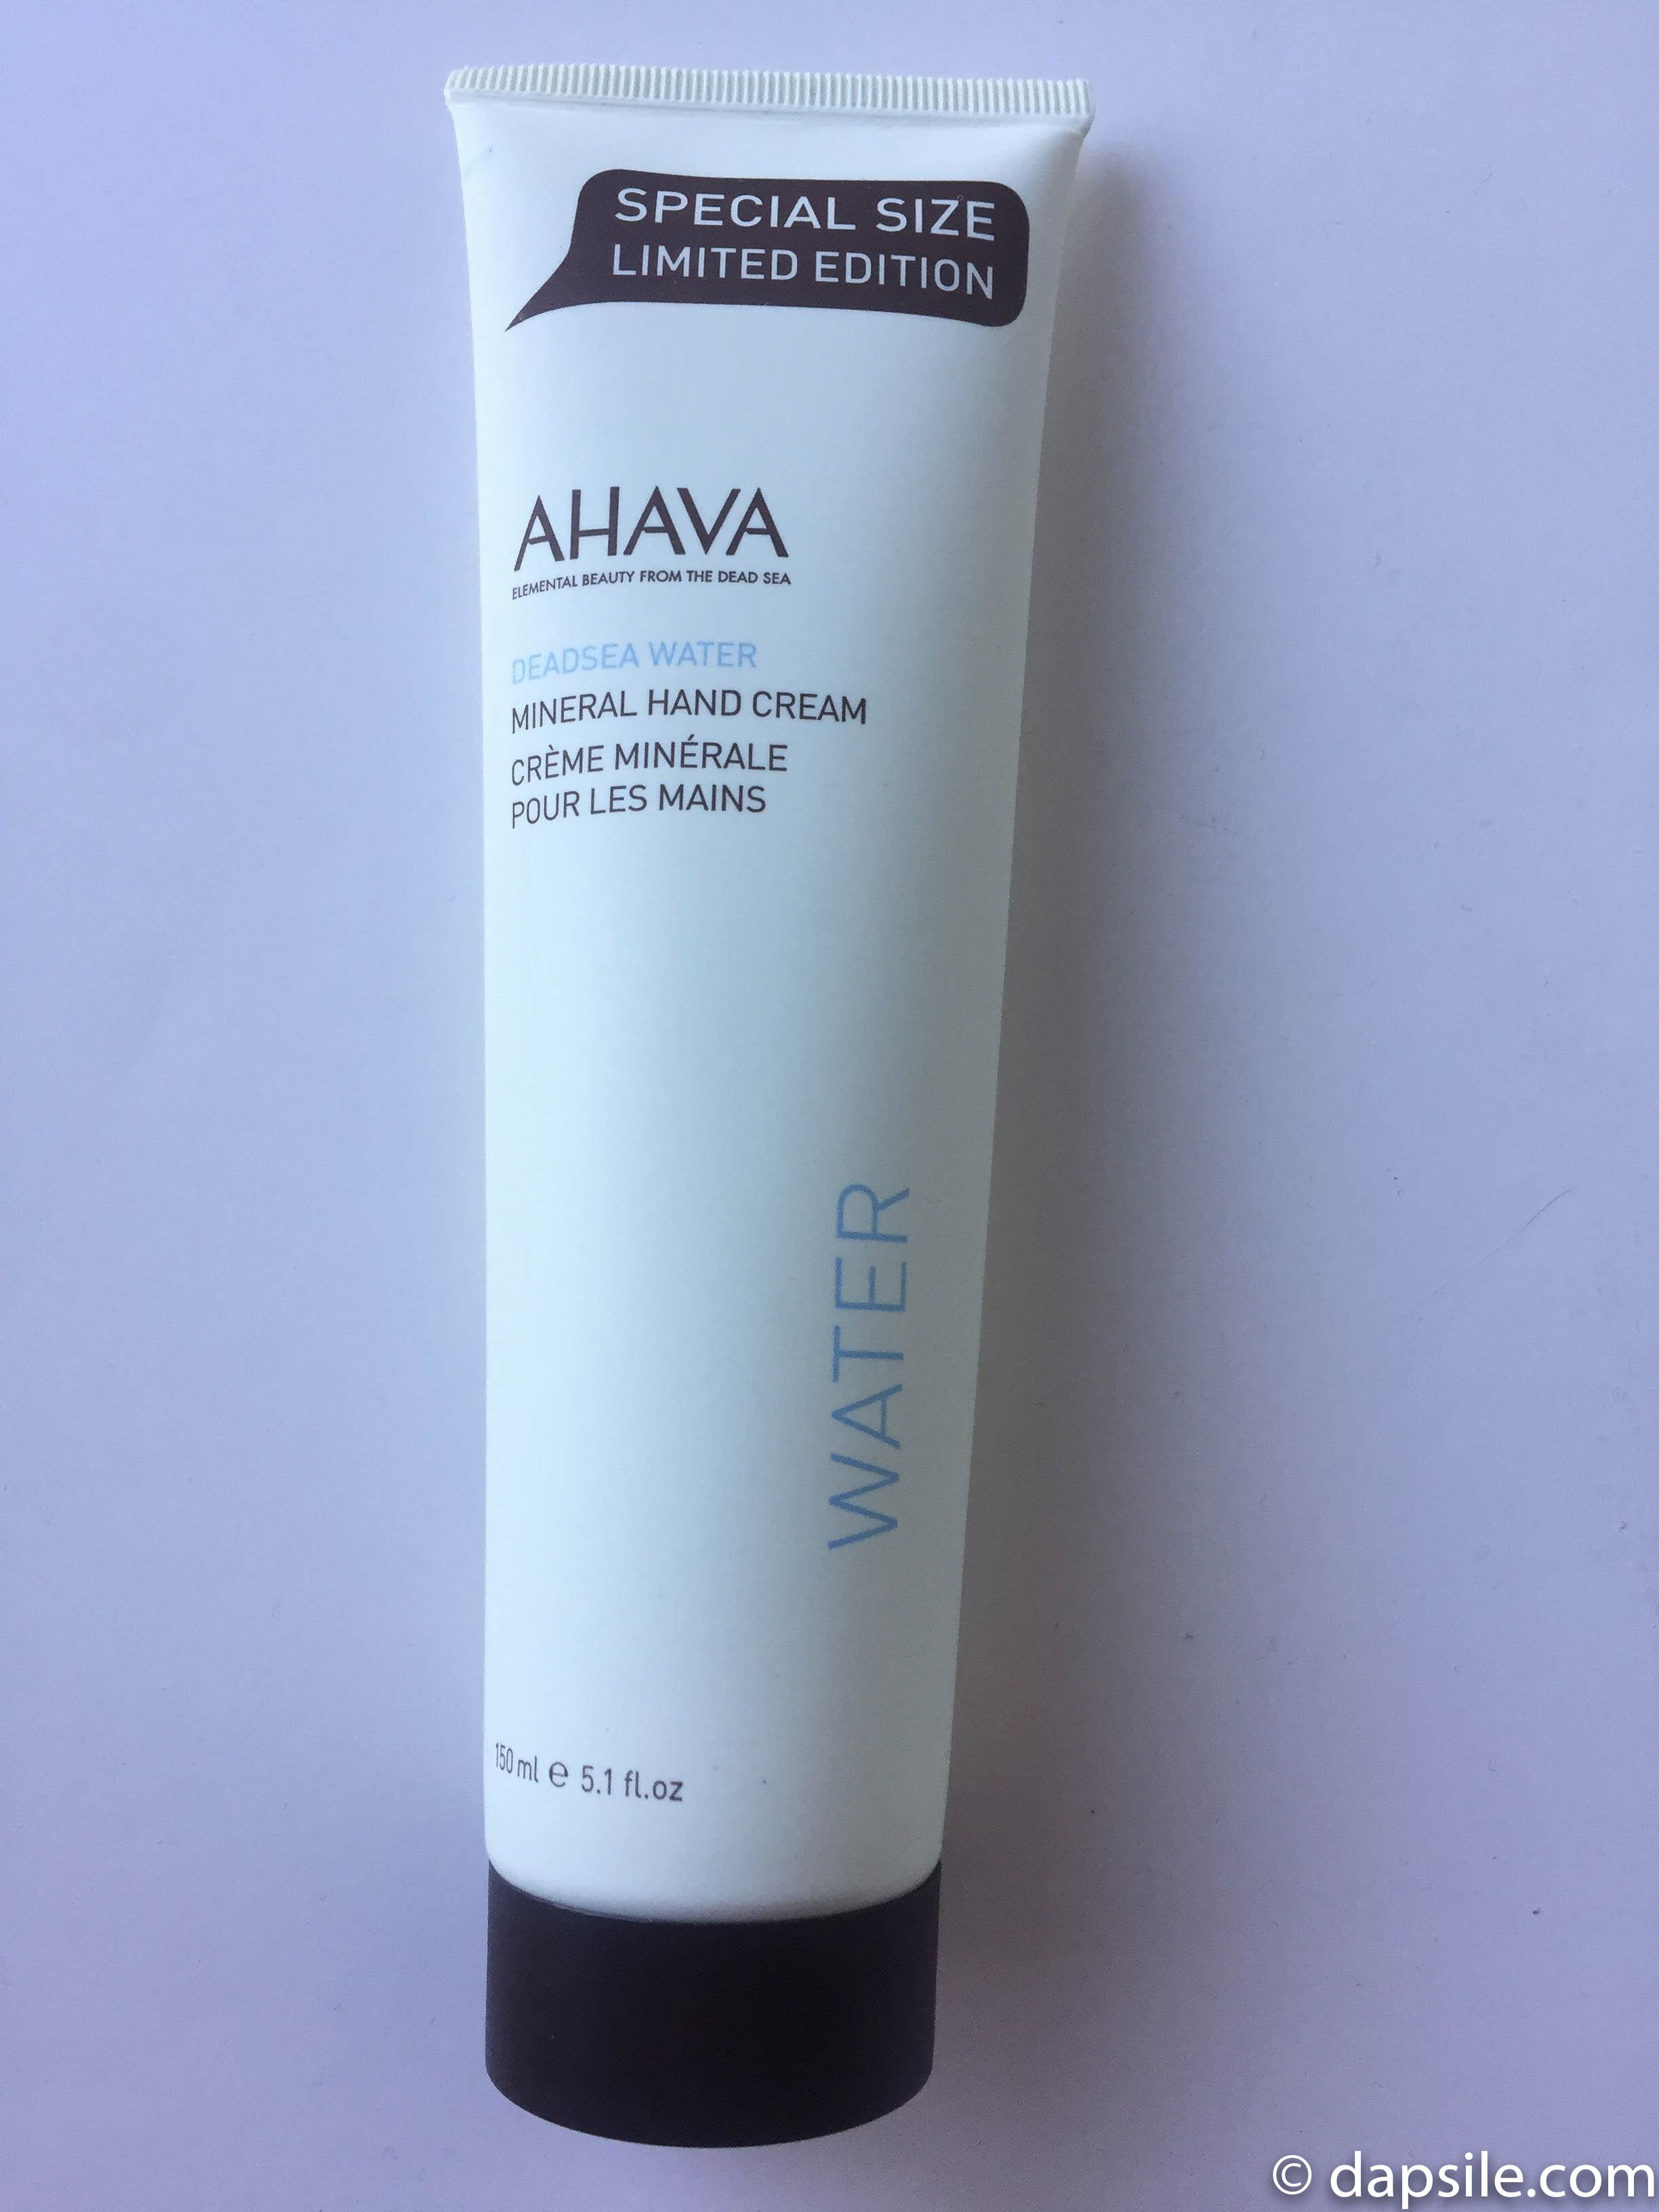 AHAVA Dead Sea Water Hand Cream from the FabFitFun Winter 2017 subscription box